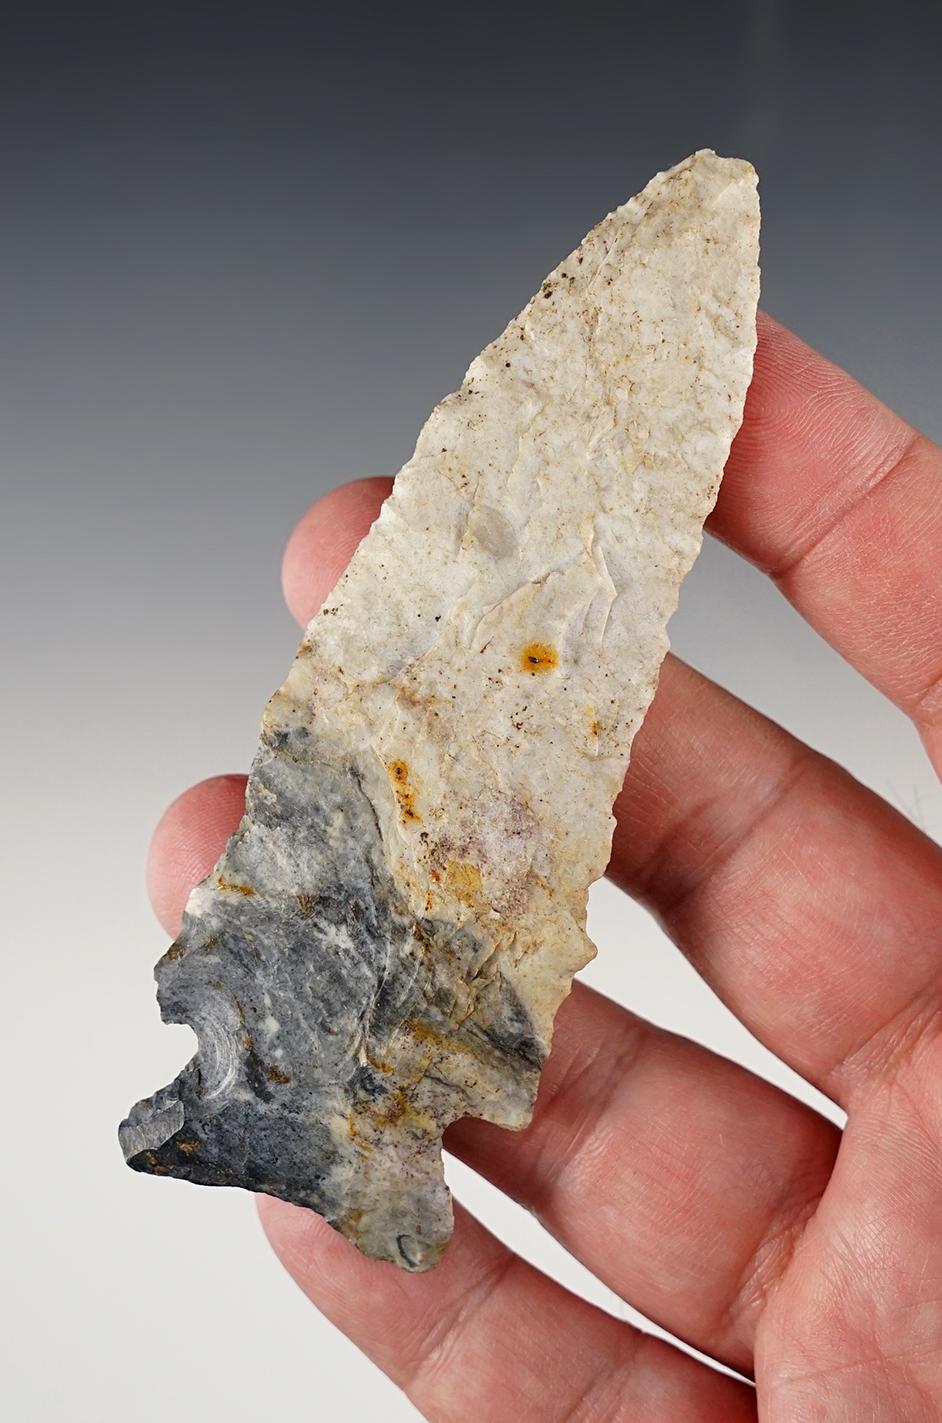 4 3/16" Archaic Cornernotch found in Knox Co., Ohio. Bennett COA.